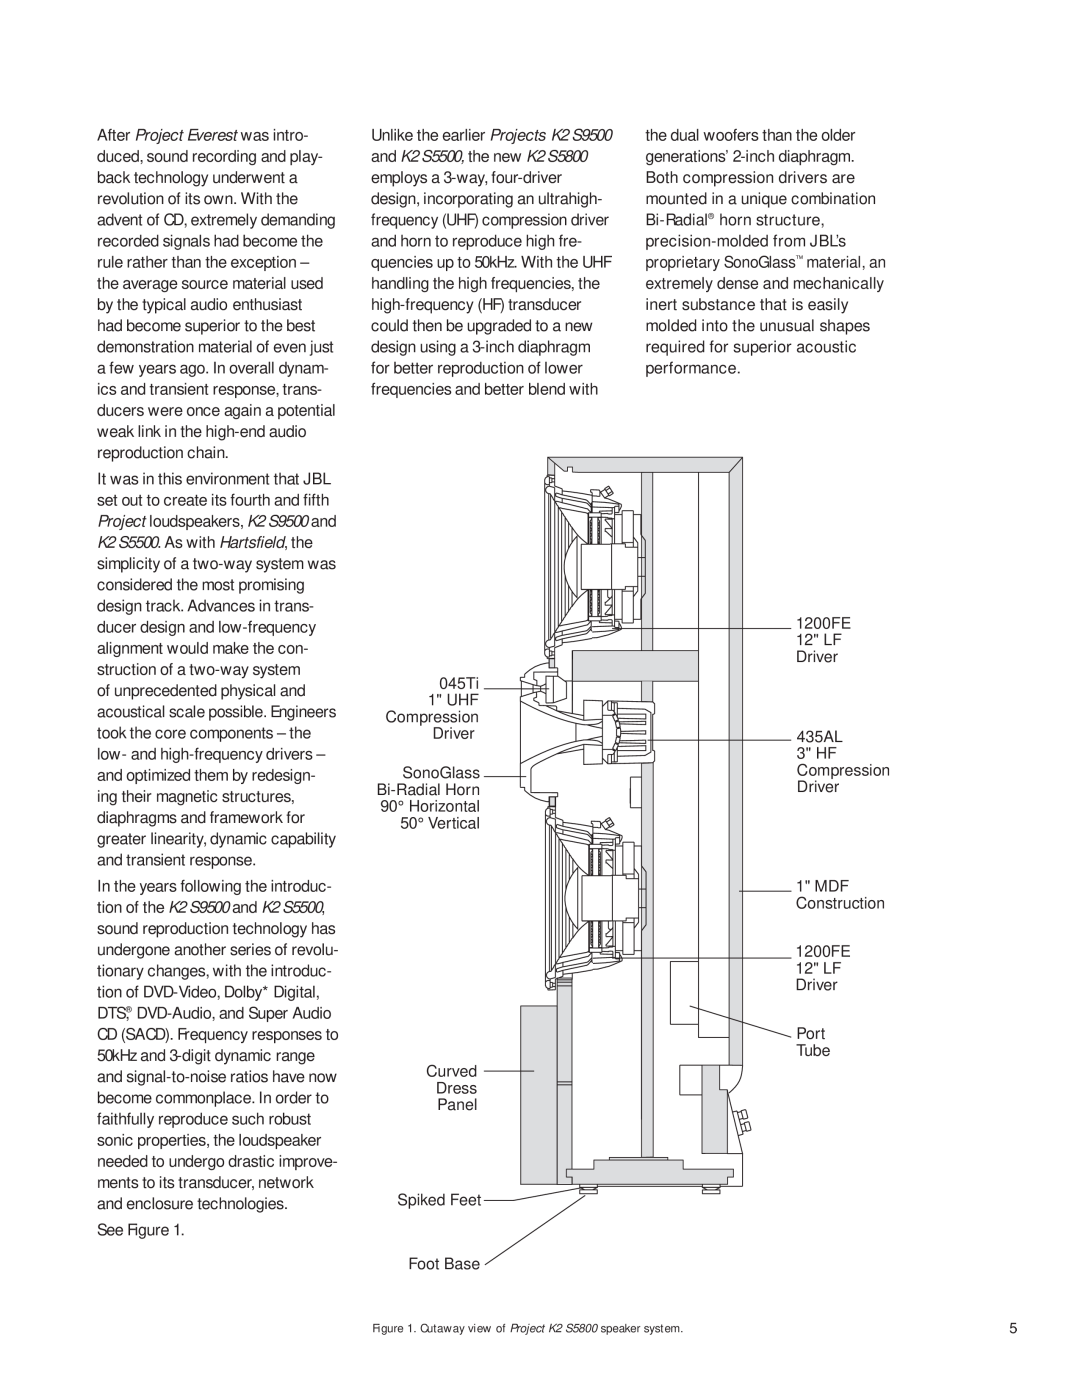 JBL K2 S5800 manual and enclosure technologies See Figure 